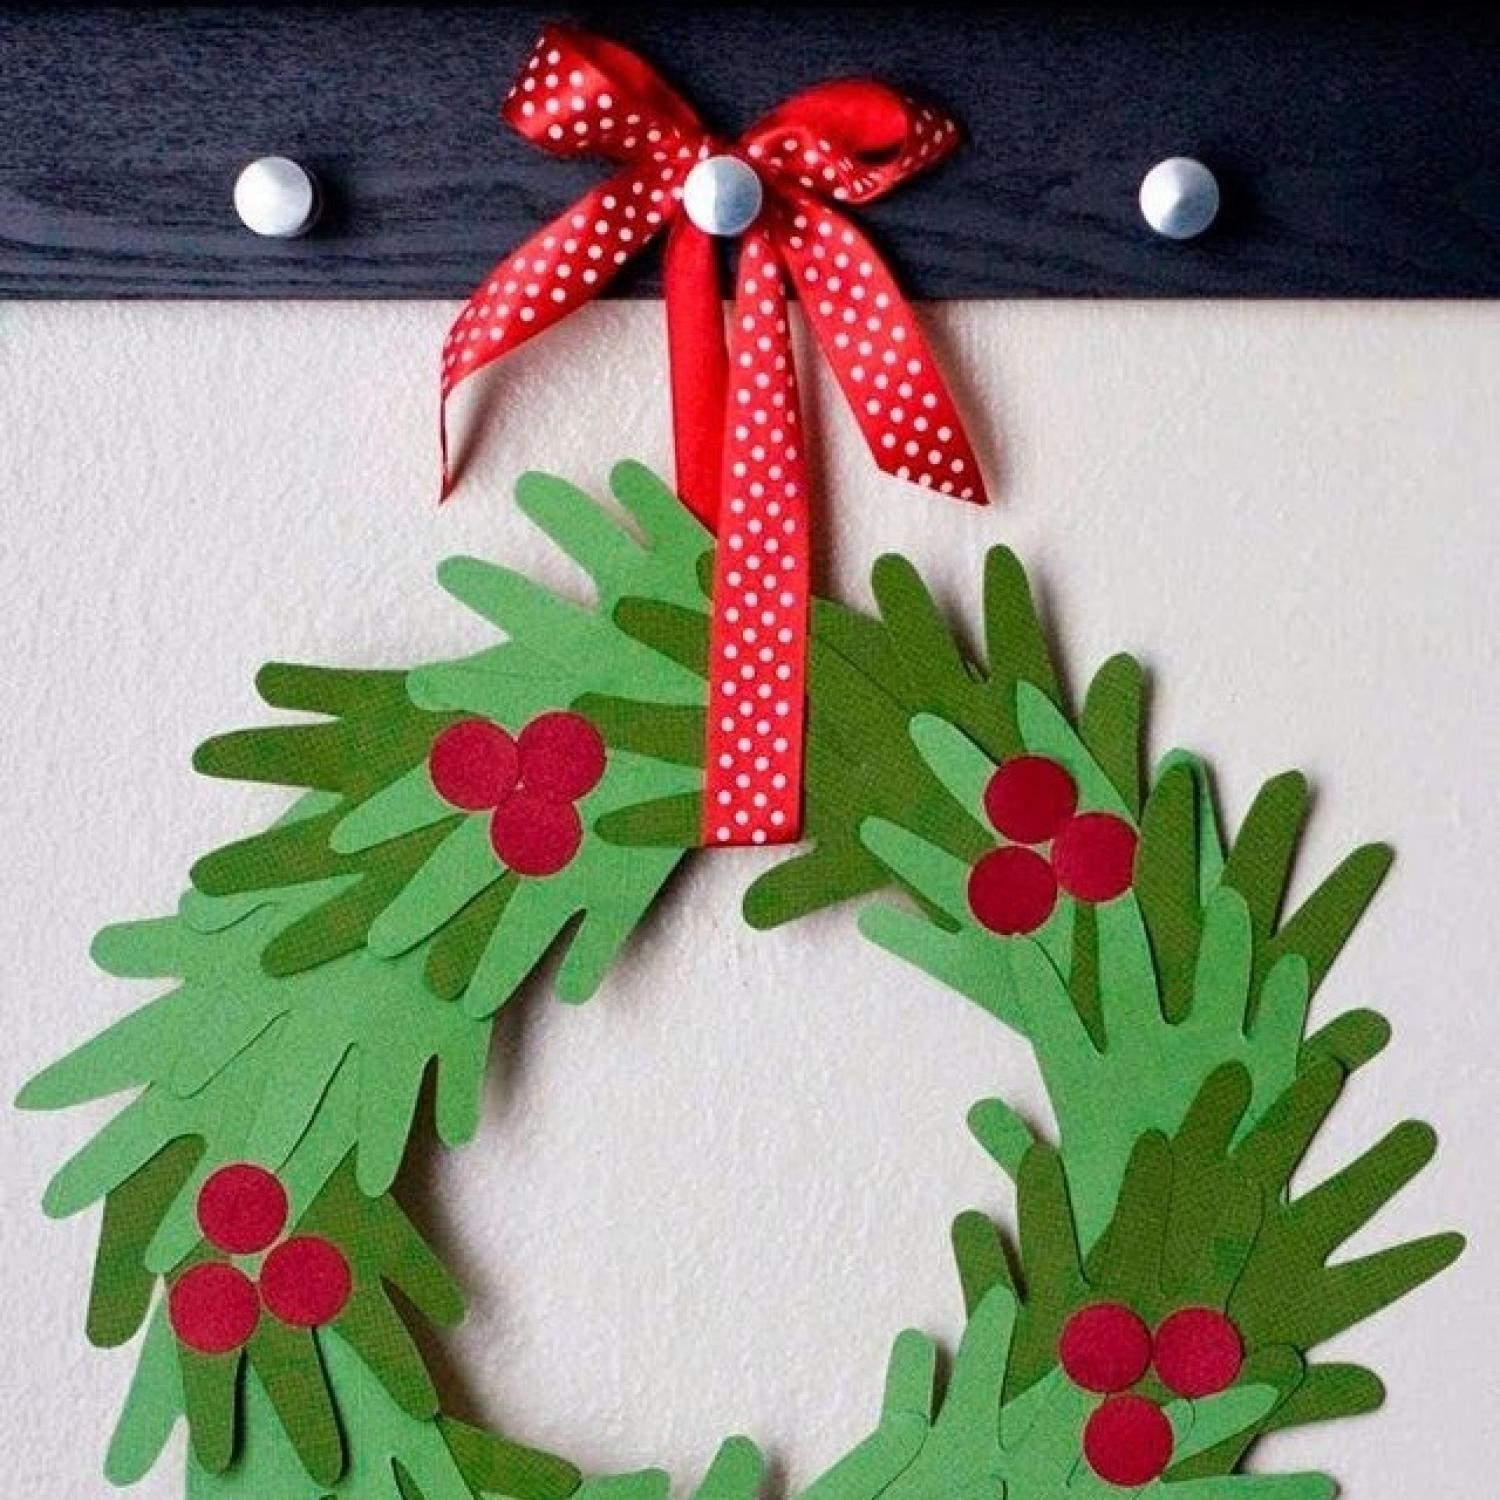 Christmas Art Ideas For Preschoolers
 10 Handprint Christmas Crafts for Kids